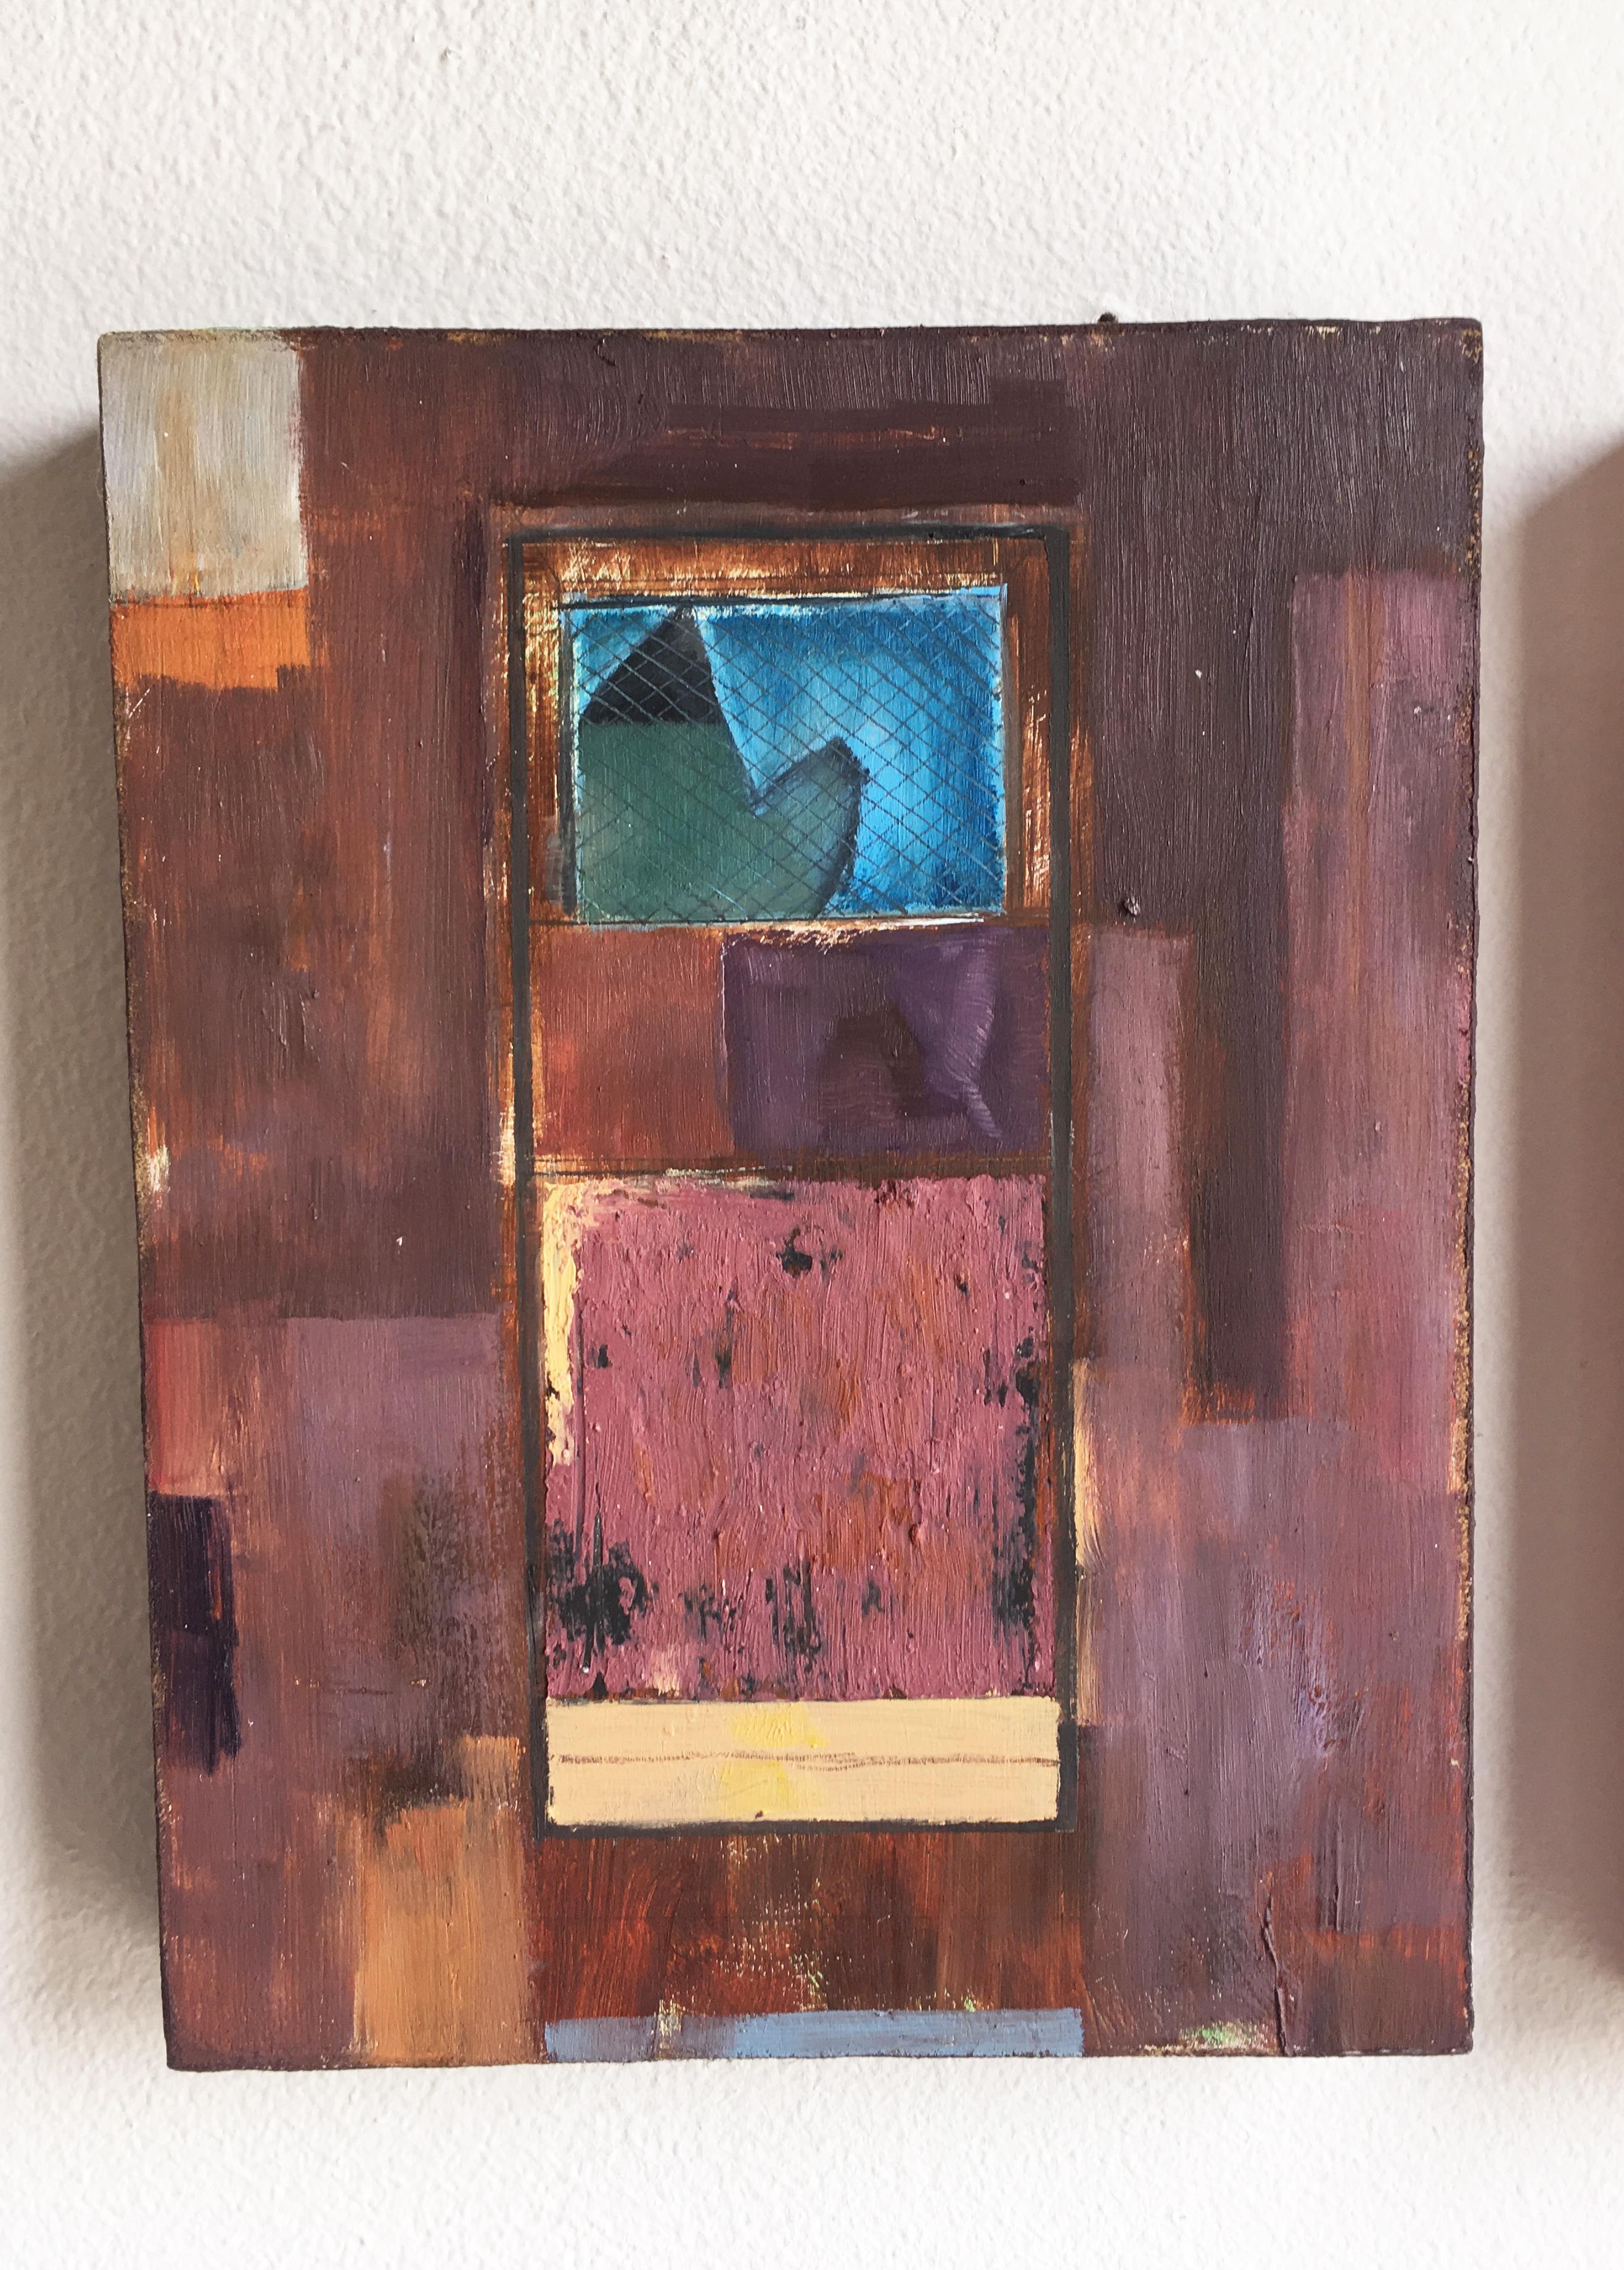 Francesca Reyes Figurative Painting - "Door #1 (Reanimator)" Oil & pastel on panel, rust color earth tones, textured